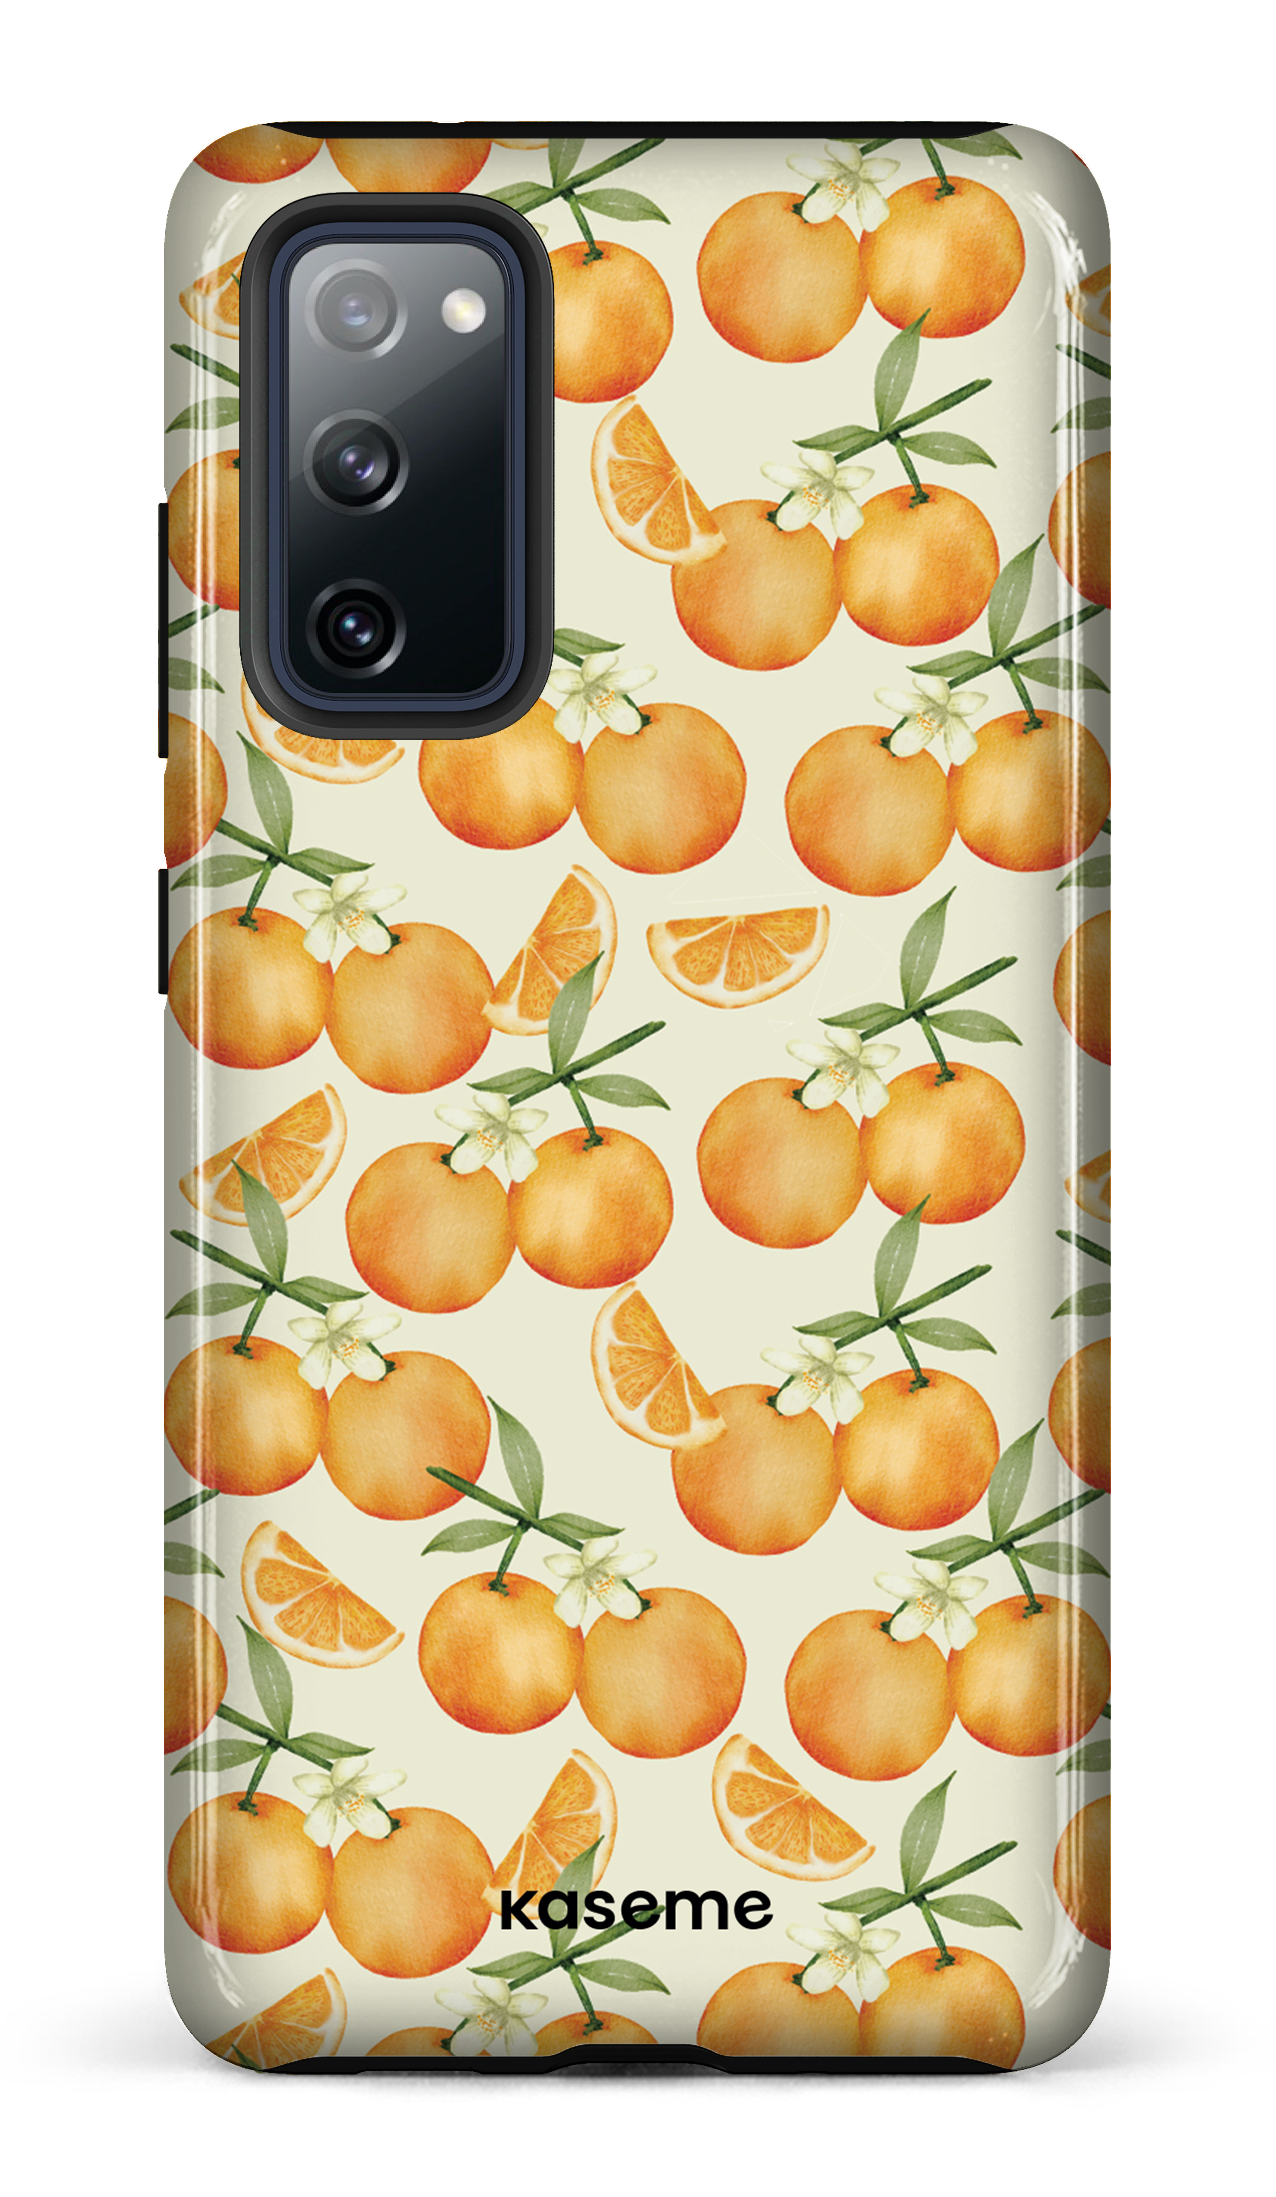 Tangerine - Galaxy S20 FE